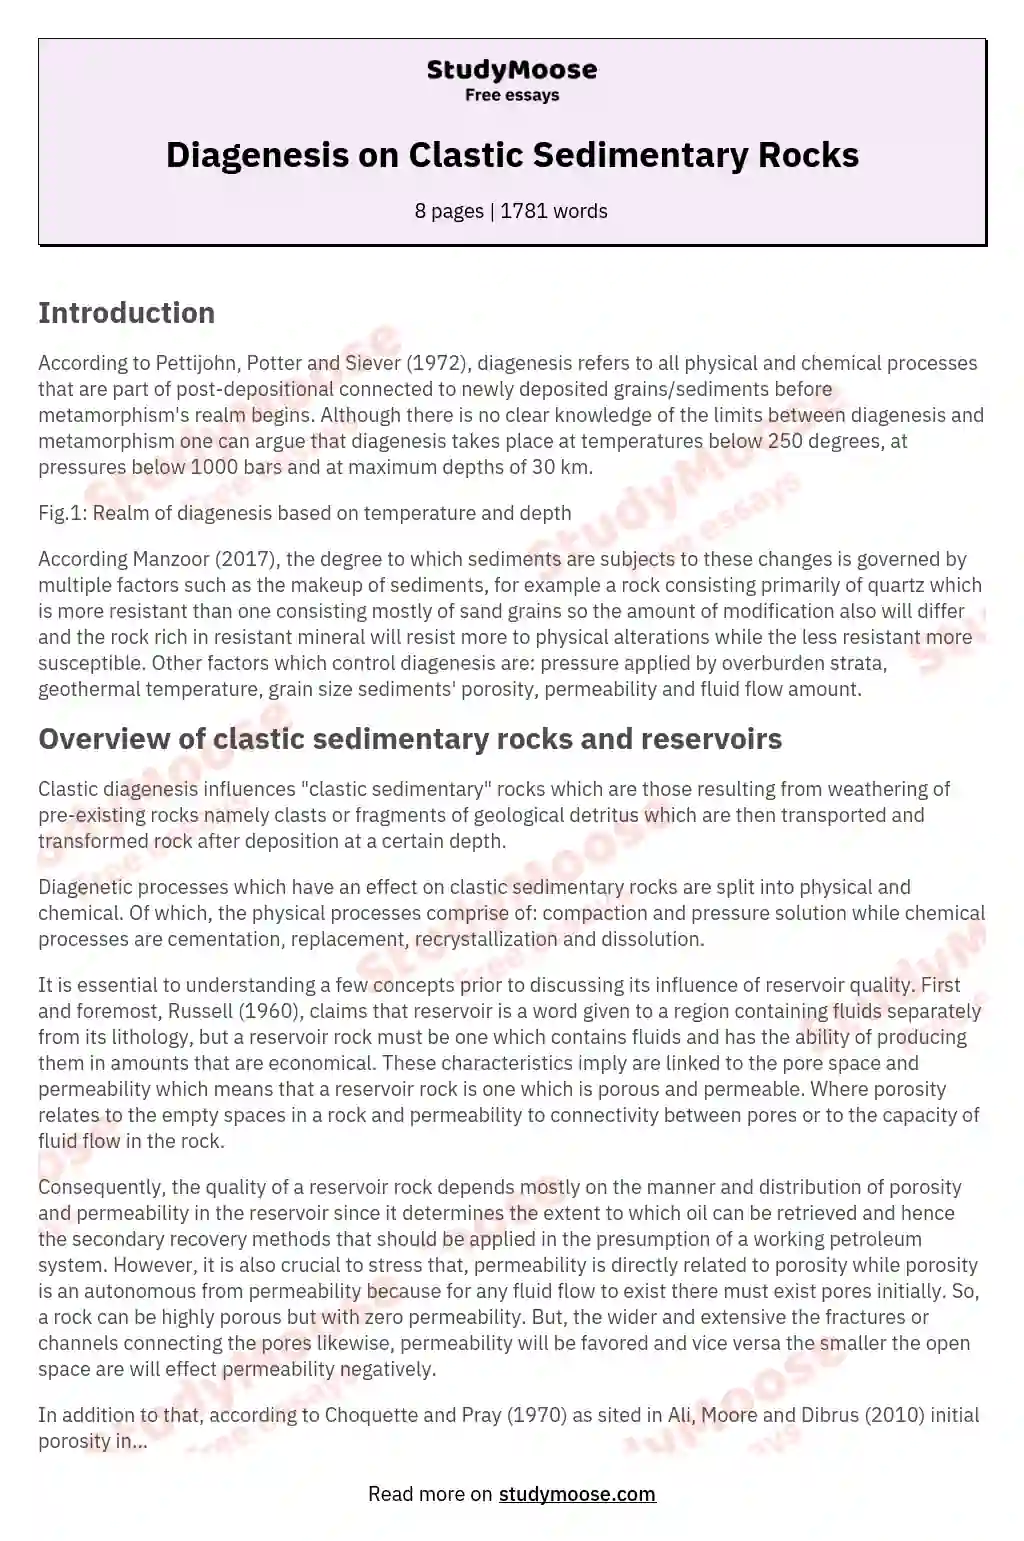 Diagenesis on Clastic Sedimentary Rocks essay